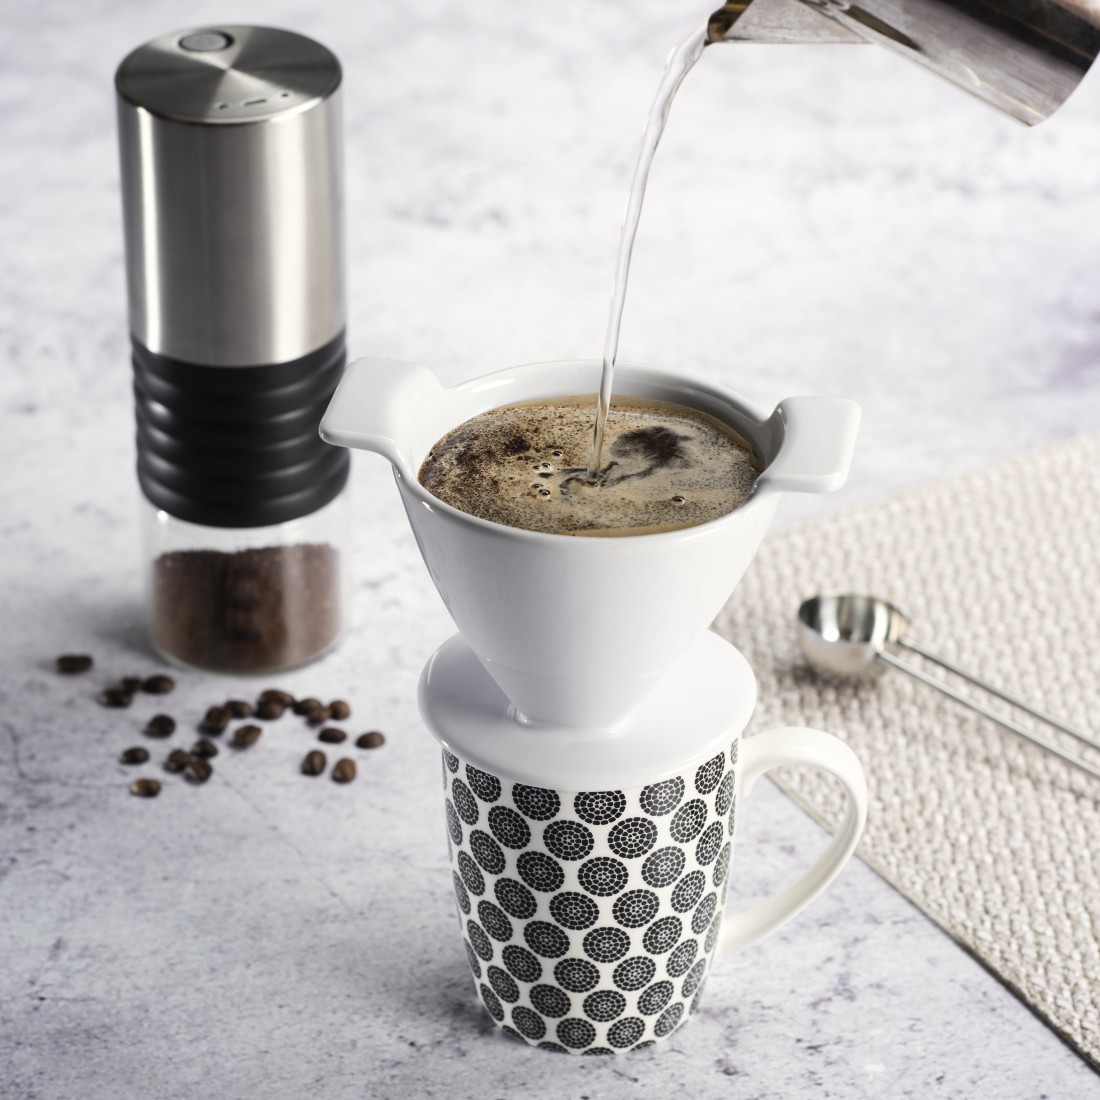 awx5 High-Res Appliance 5 - Xavax, Porcelain Coffee Filter, size 2, white